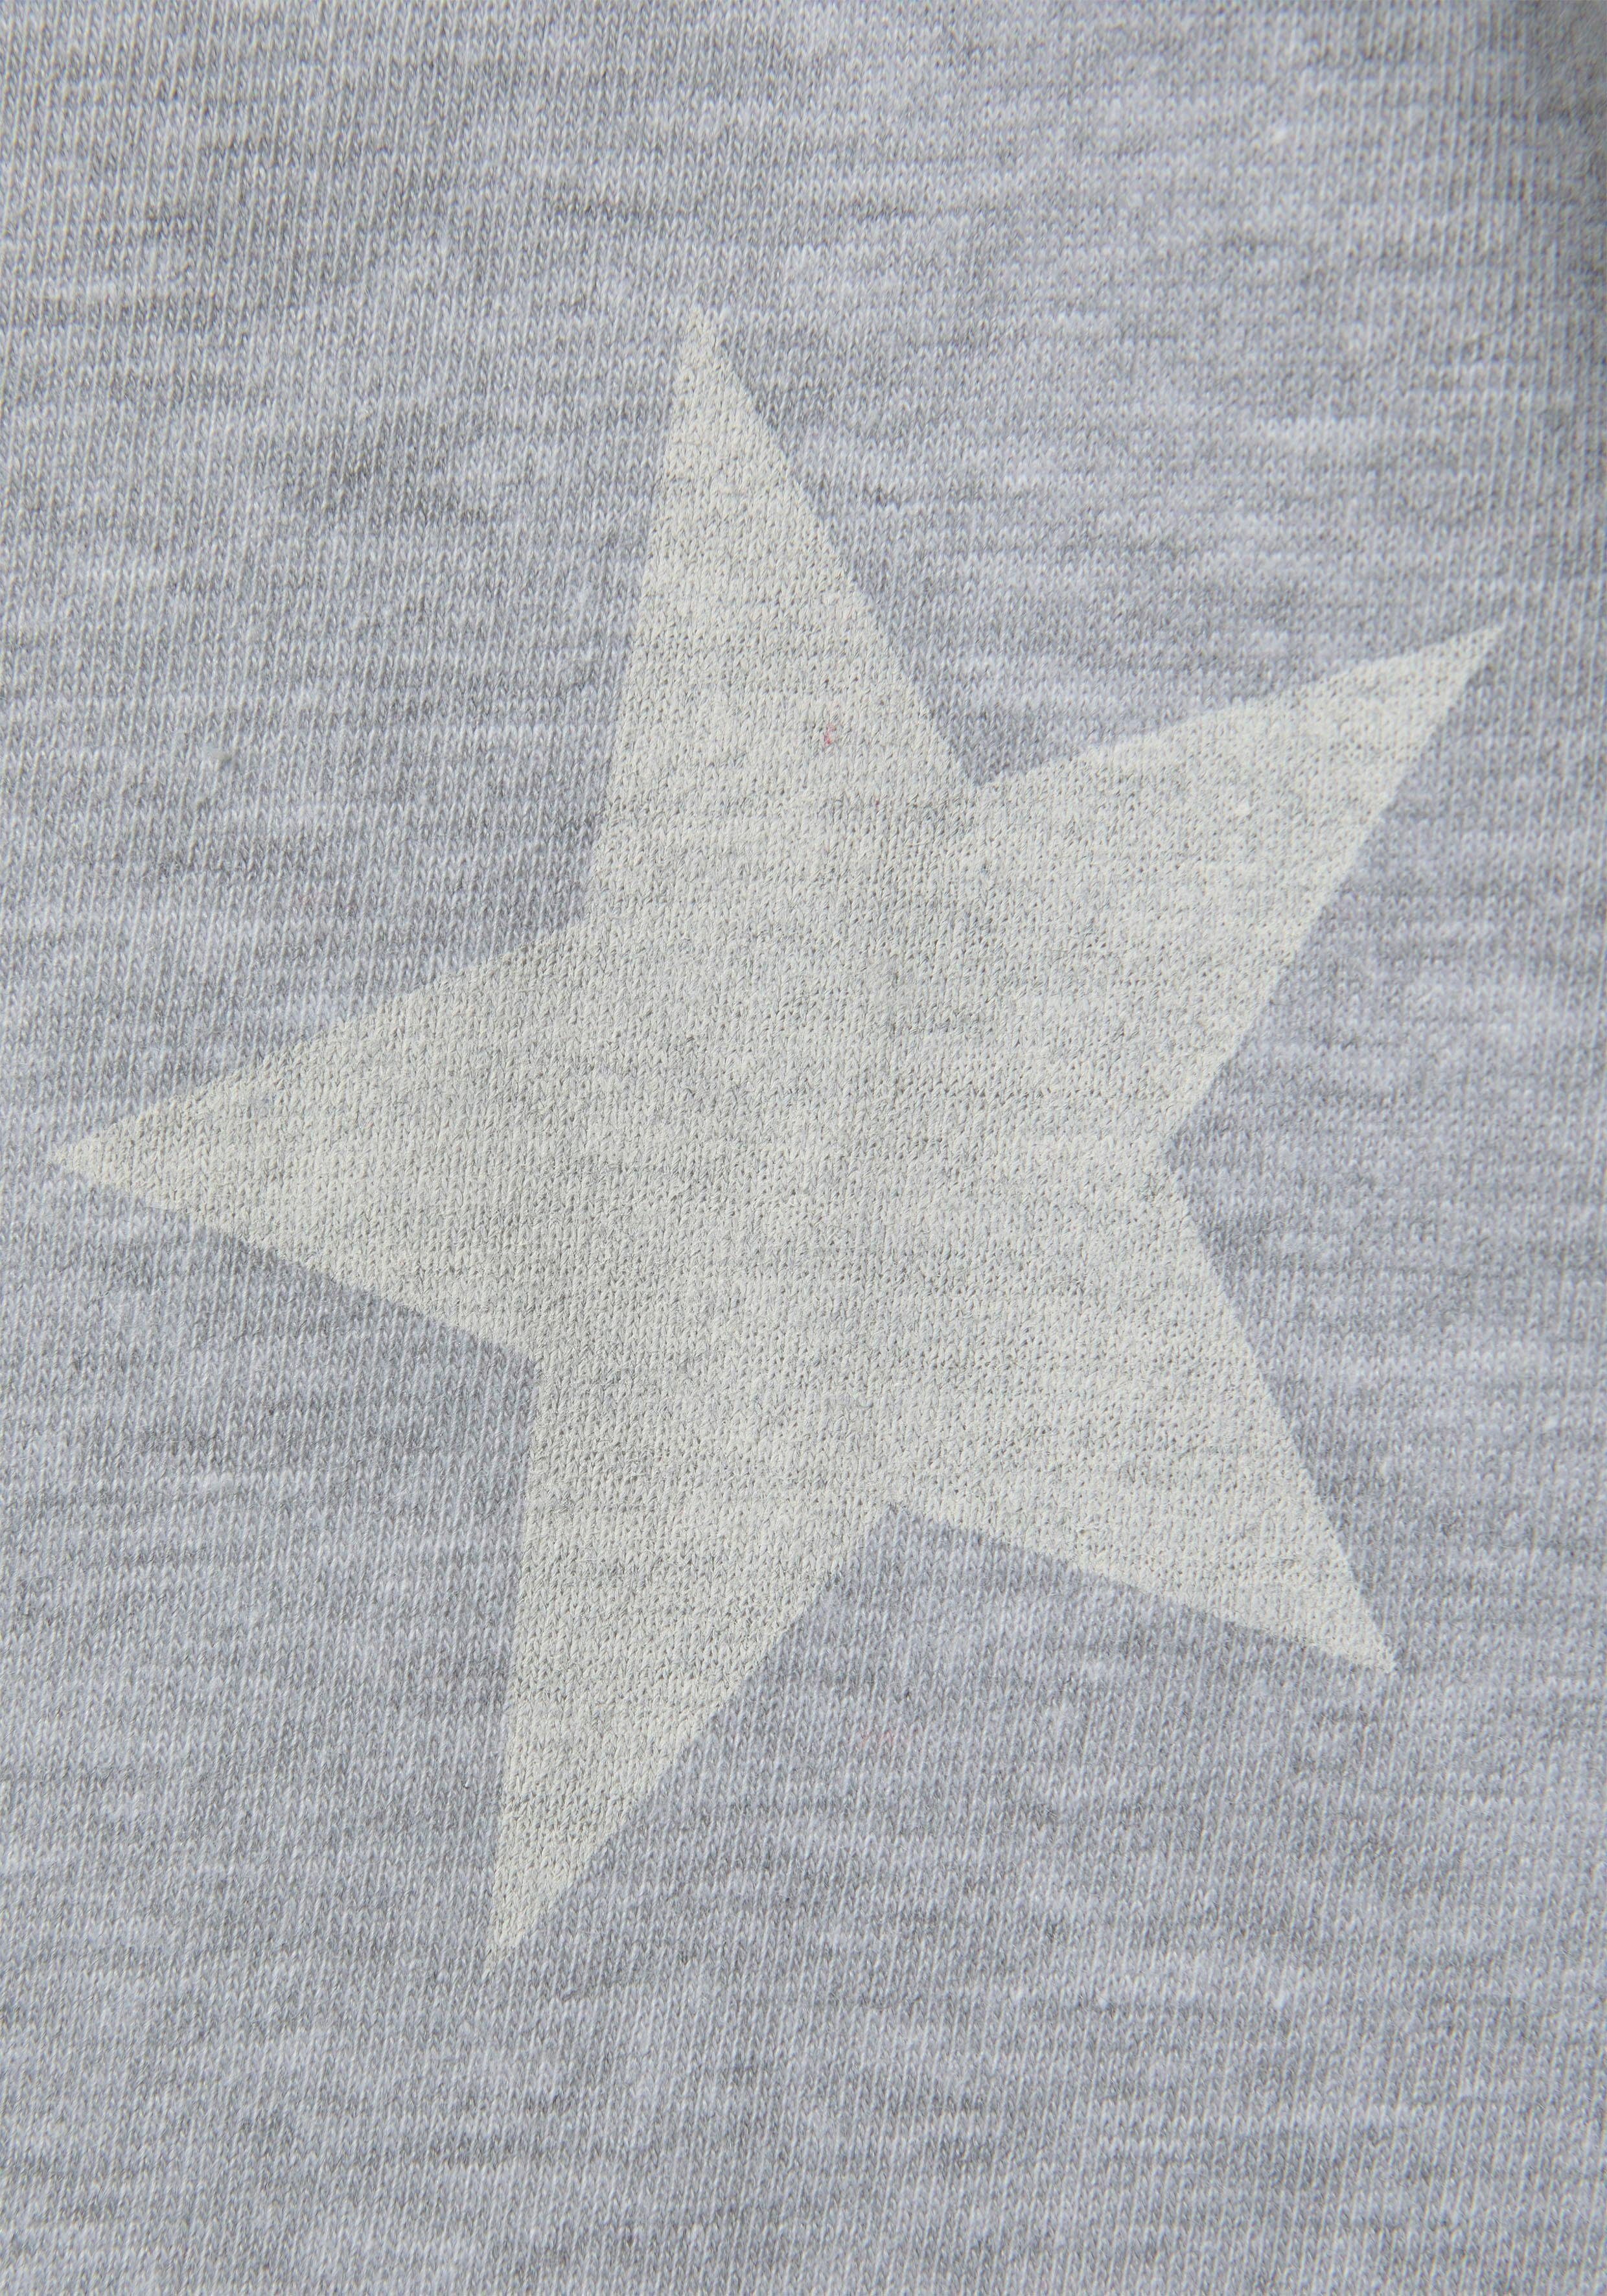 Arizona Nachthemd (2er-Pack) grau-rosa mit Sternen in melierter Optik